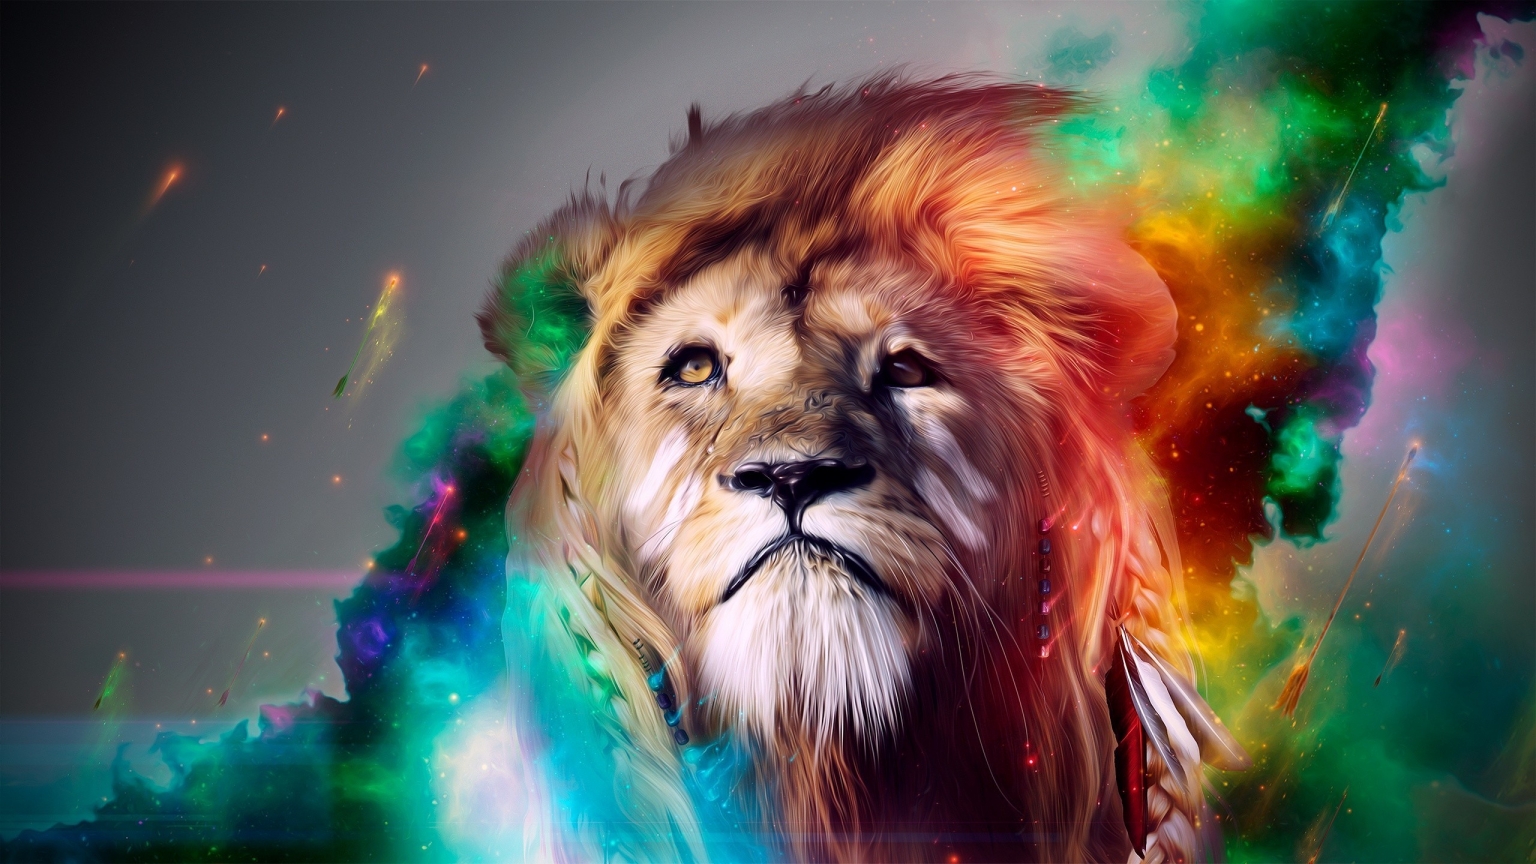 Rainbow Lion for 1536 x 864 HDTV resolution